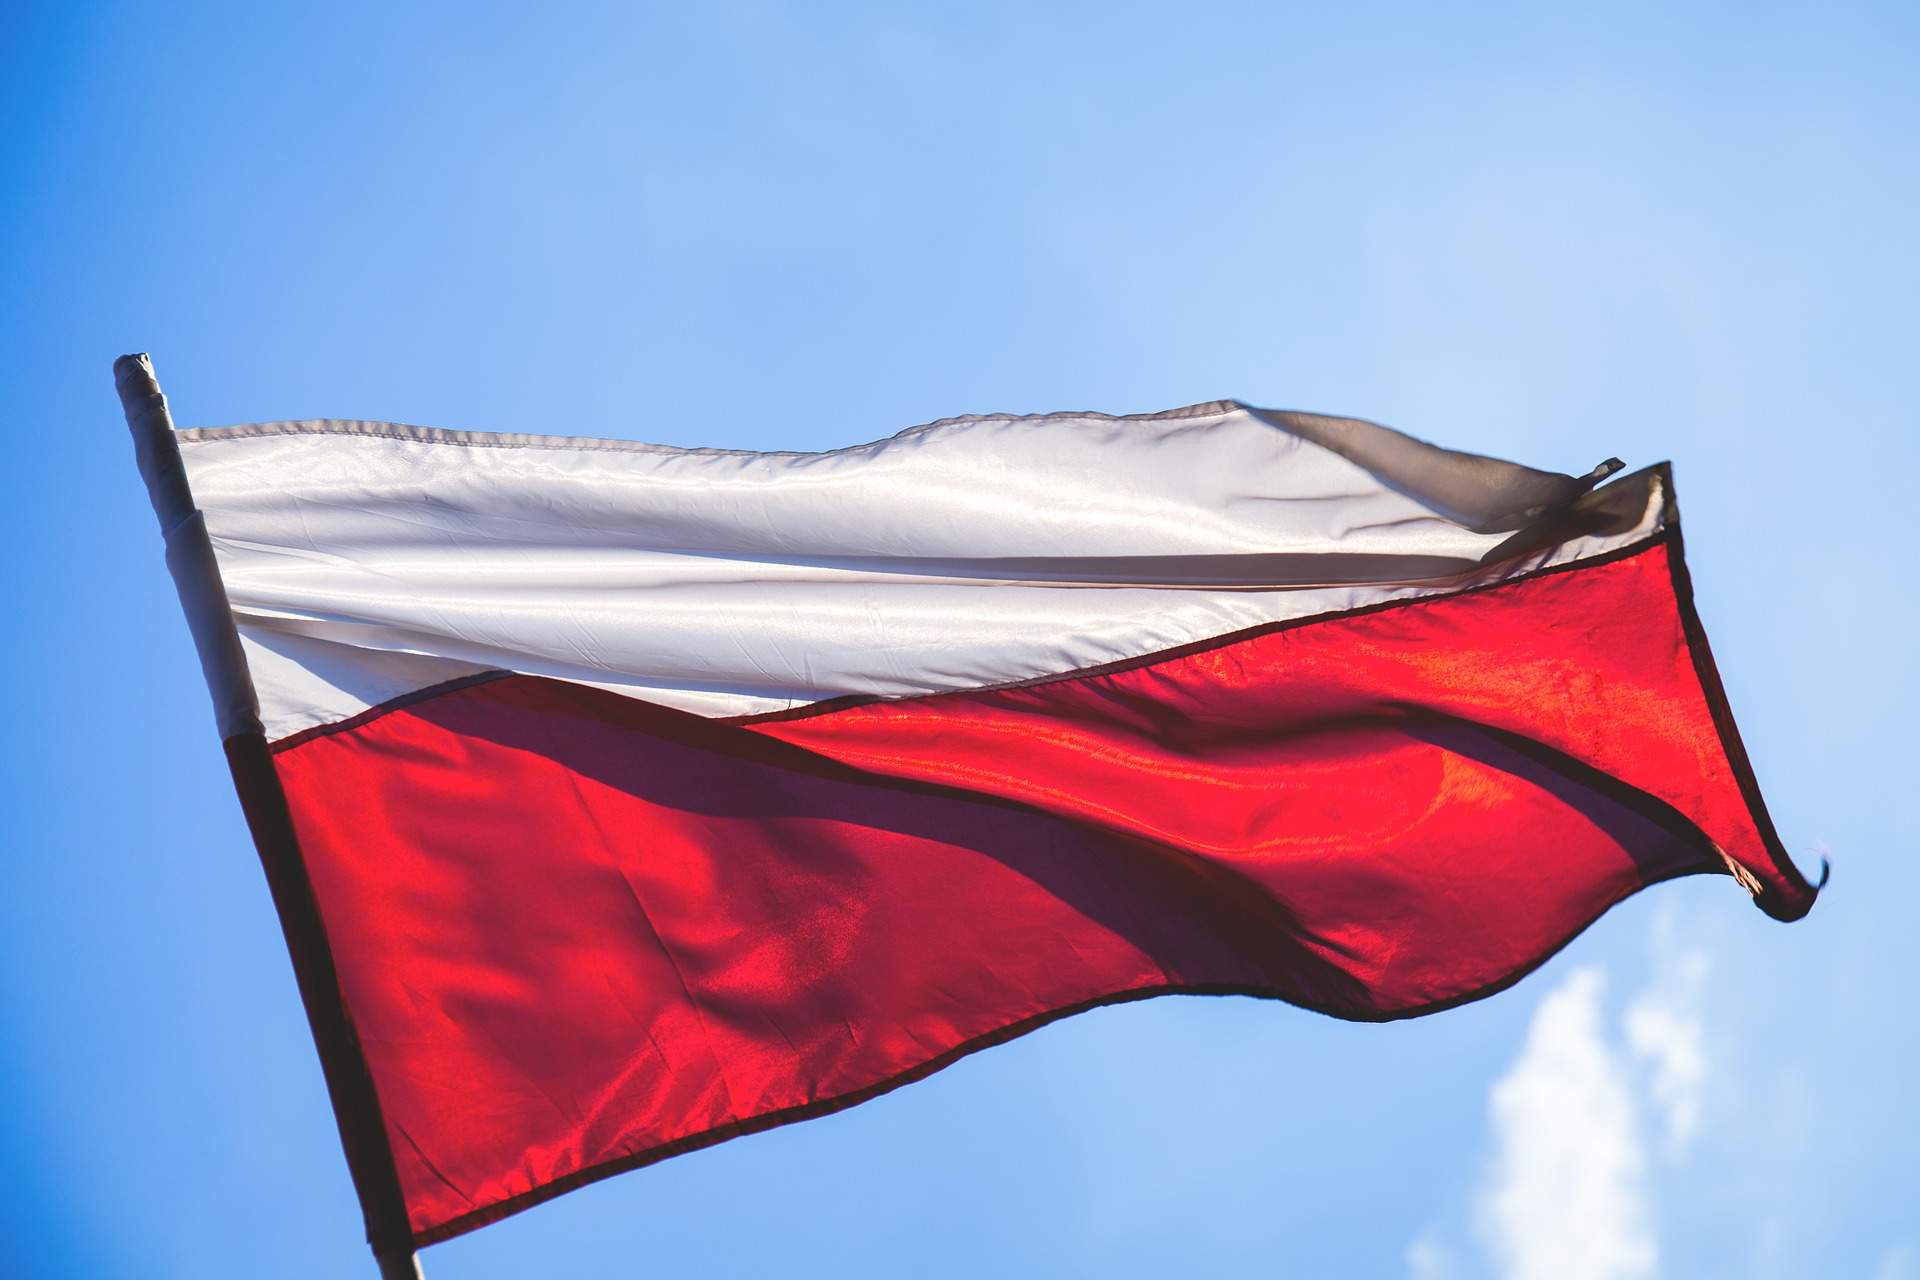 Santander to buy Deutsche Bank’s SME banking business in Poland